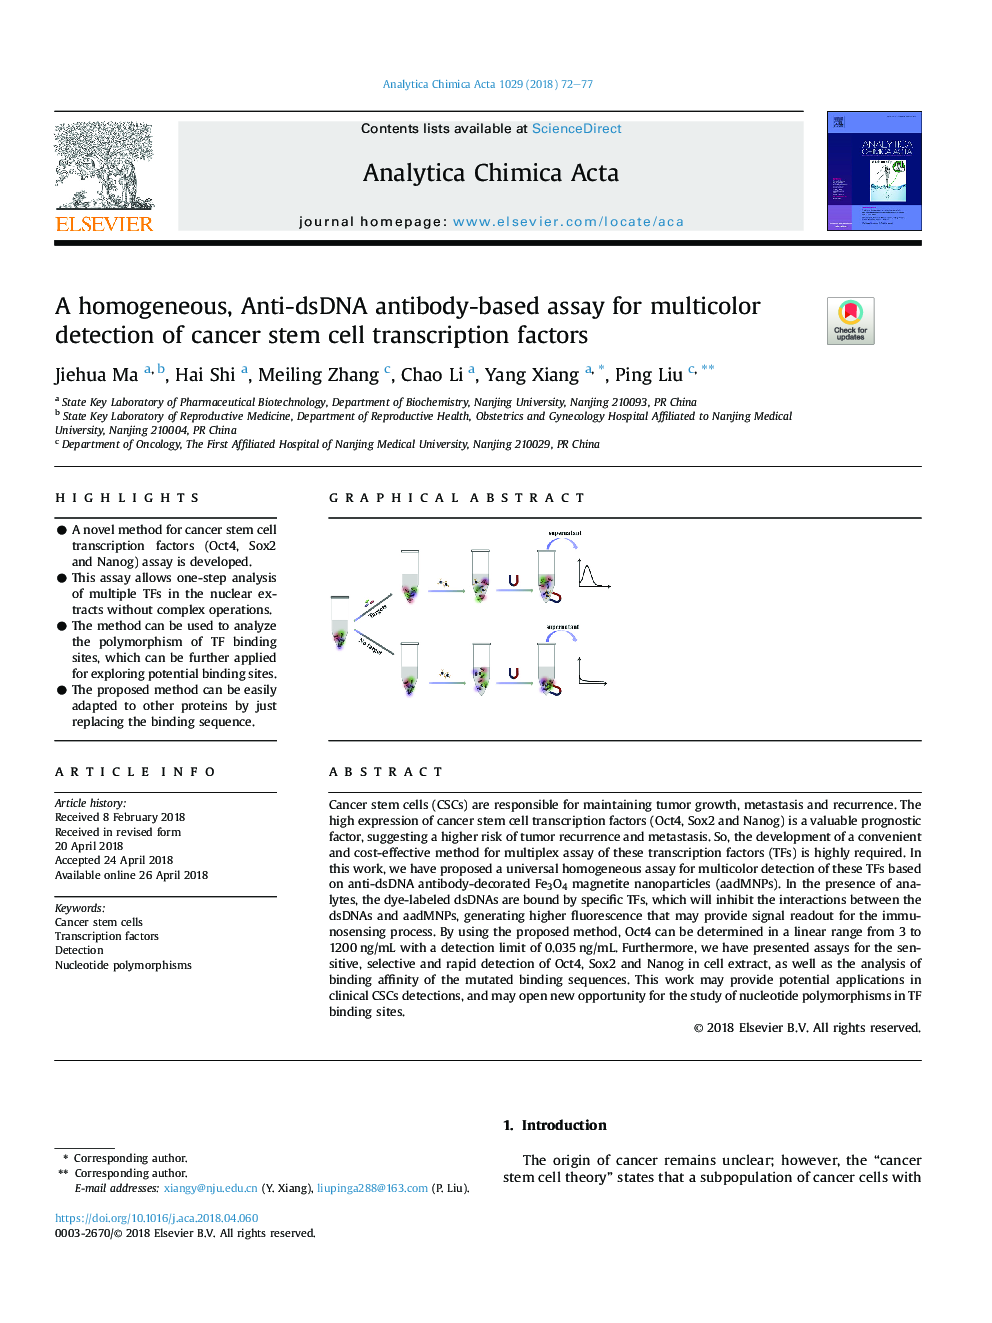 A homogeneous, Anti-dsDNA antibody-based assay for multicolor detection of cancer stem cell transcription factors